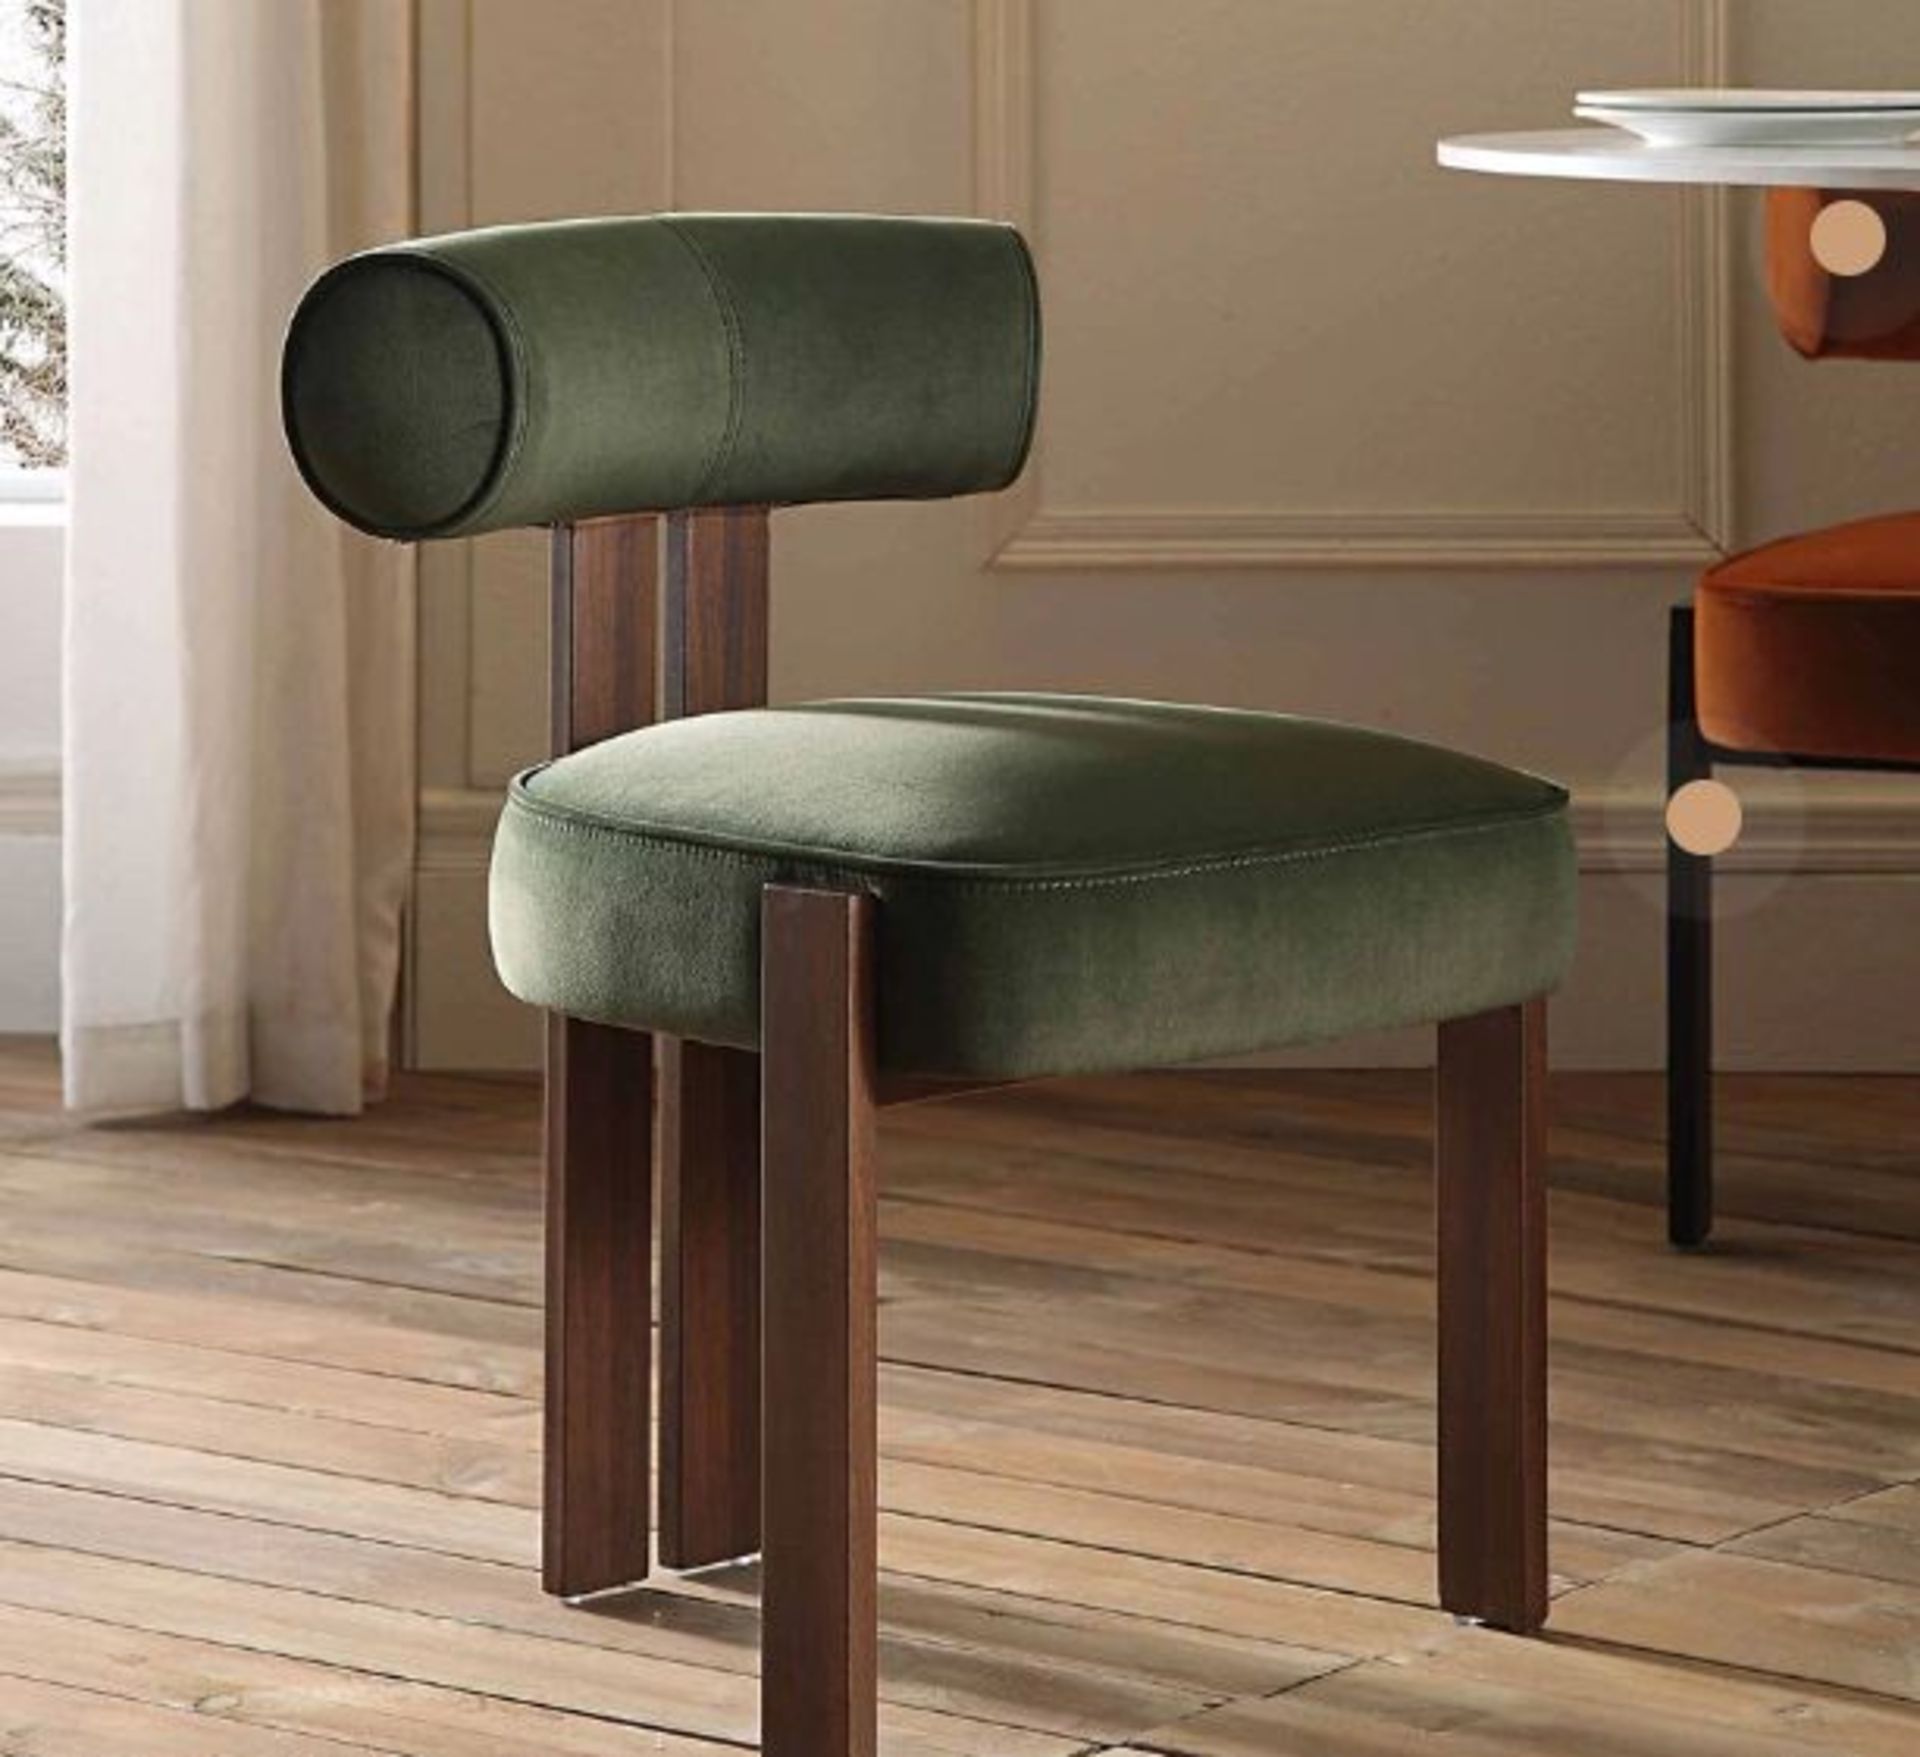 Ophelia Moss Green Velvet Dining Chair. - R19.5. RRP £209.99. Combining sumptuous moss green